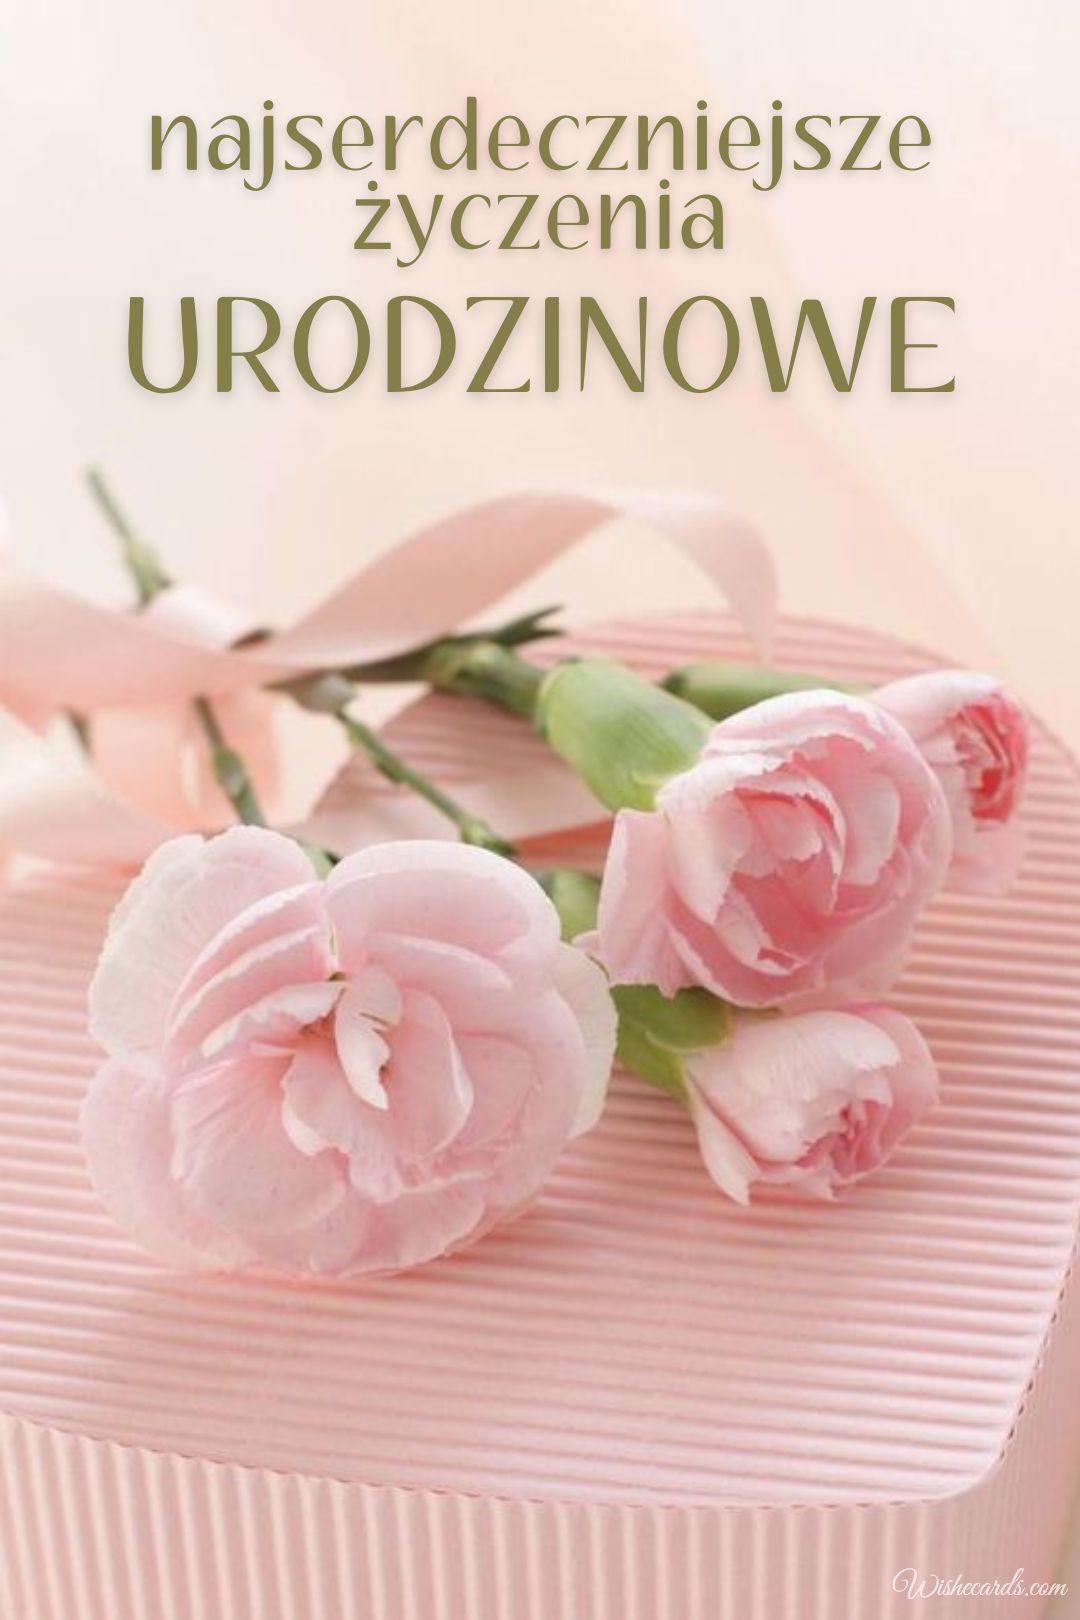 Polish Birthday Card for Woman